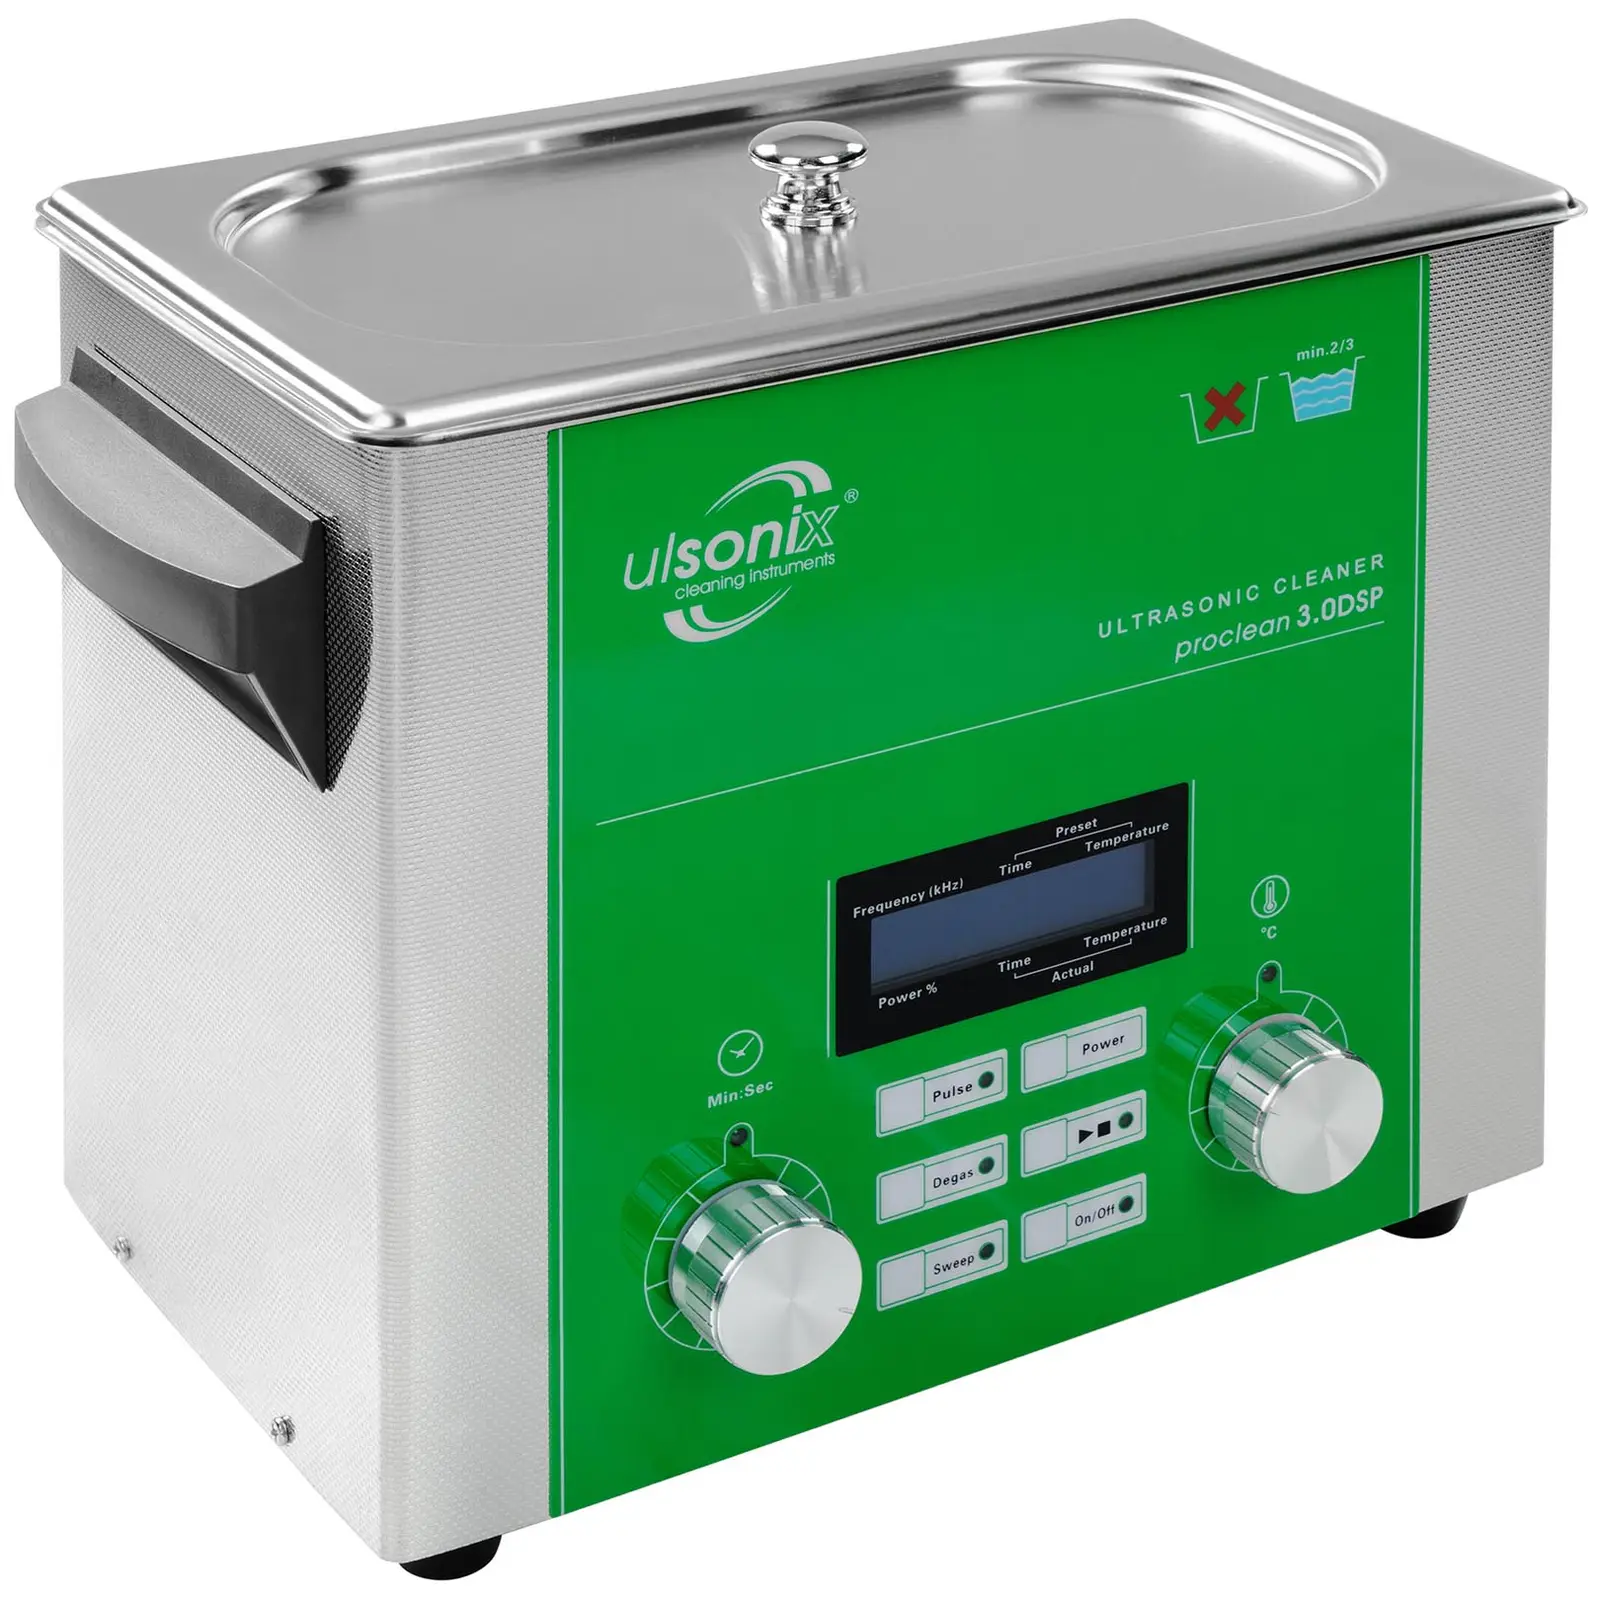 Ultrasonic Cleaner - 3 litres - degas - sweep - pulse